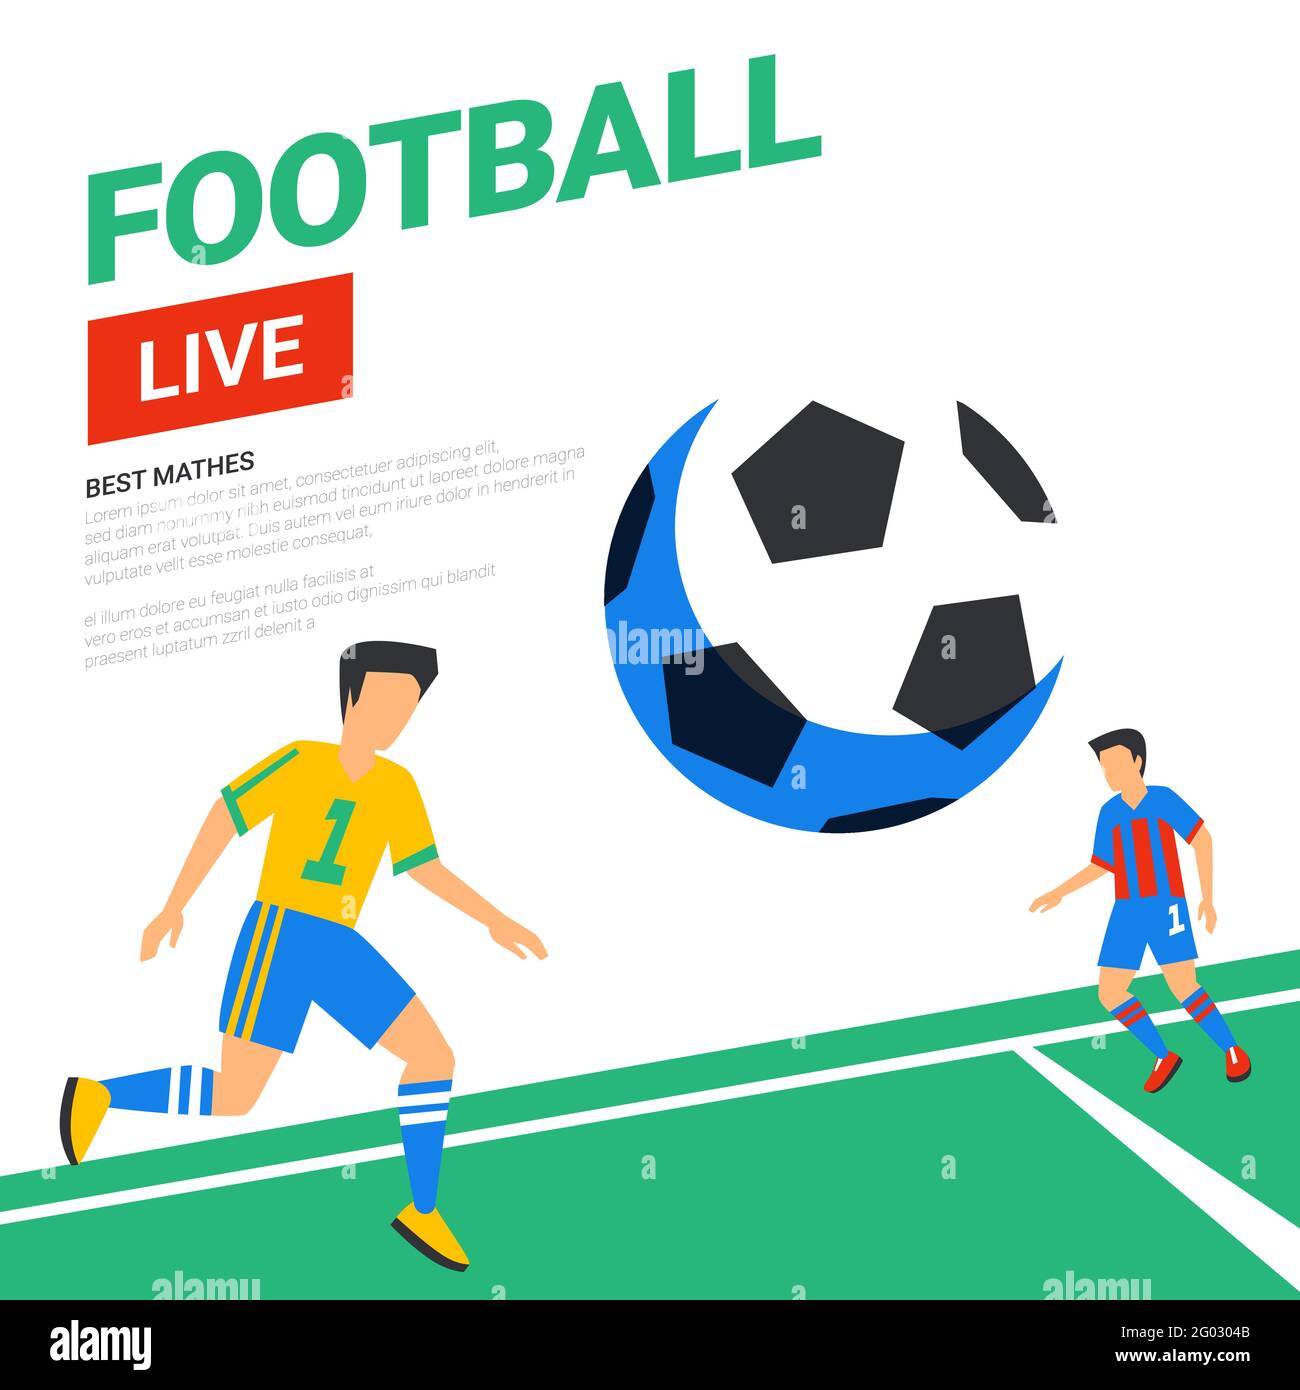 Football web banner. Live stream match